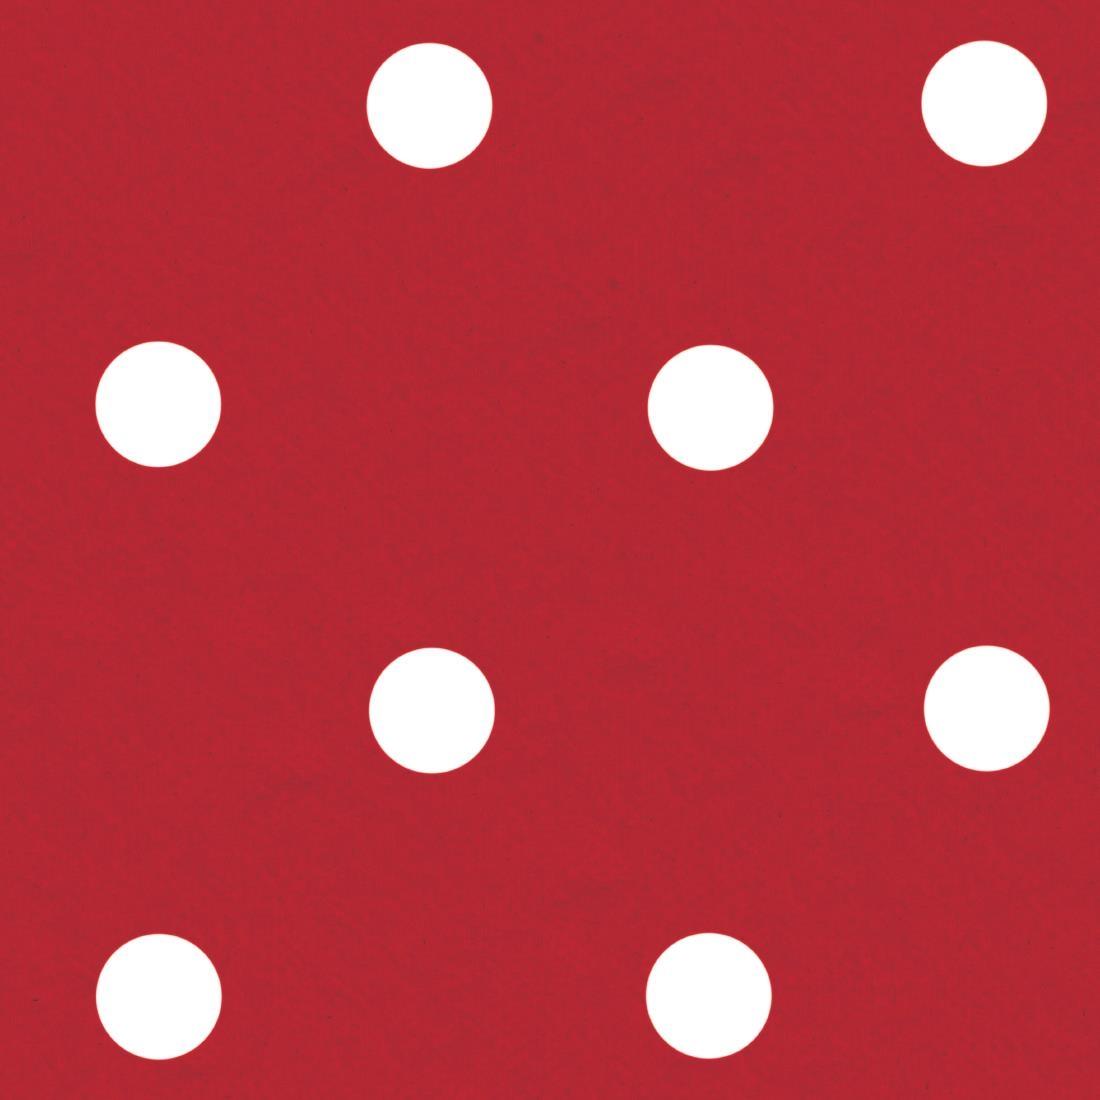 PVC Polka Dot Tablecloth Red 54 x 90in - GG807  - 2